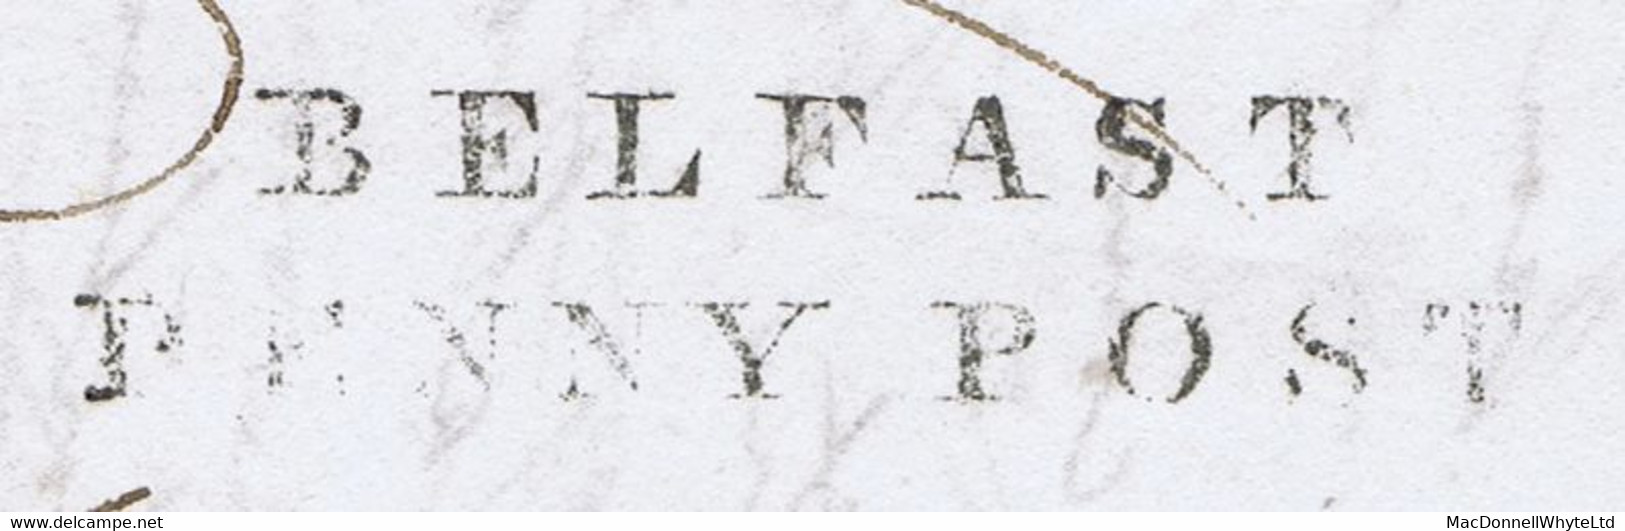 Ireland Belfast 1833 Letter Unframed BELFAST/PENNY POST With Fancy Framed "No2" Receiver Of Abbeylands - Prephilately